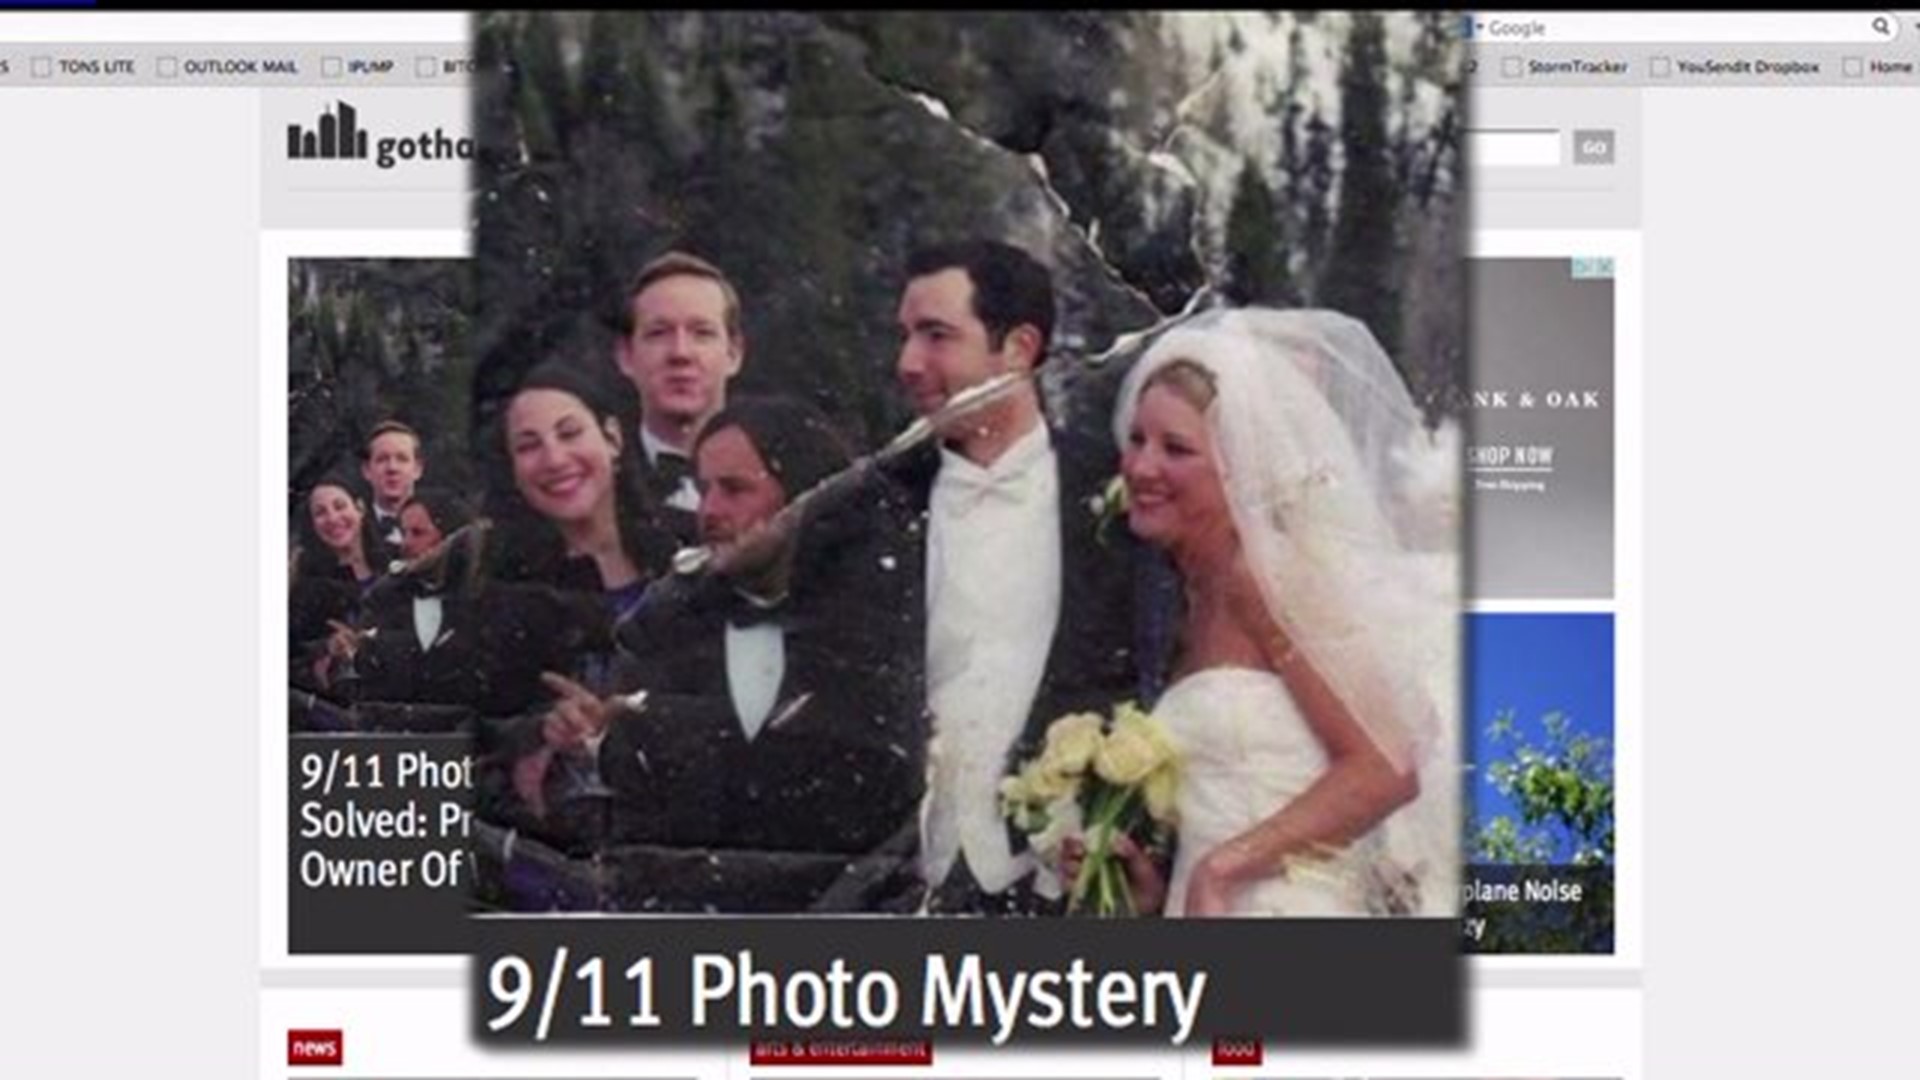 Ground Zero wedding photo mystery